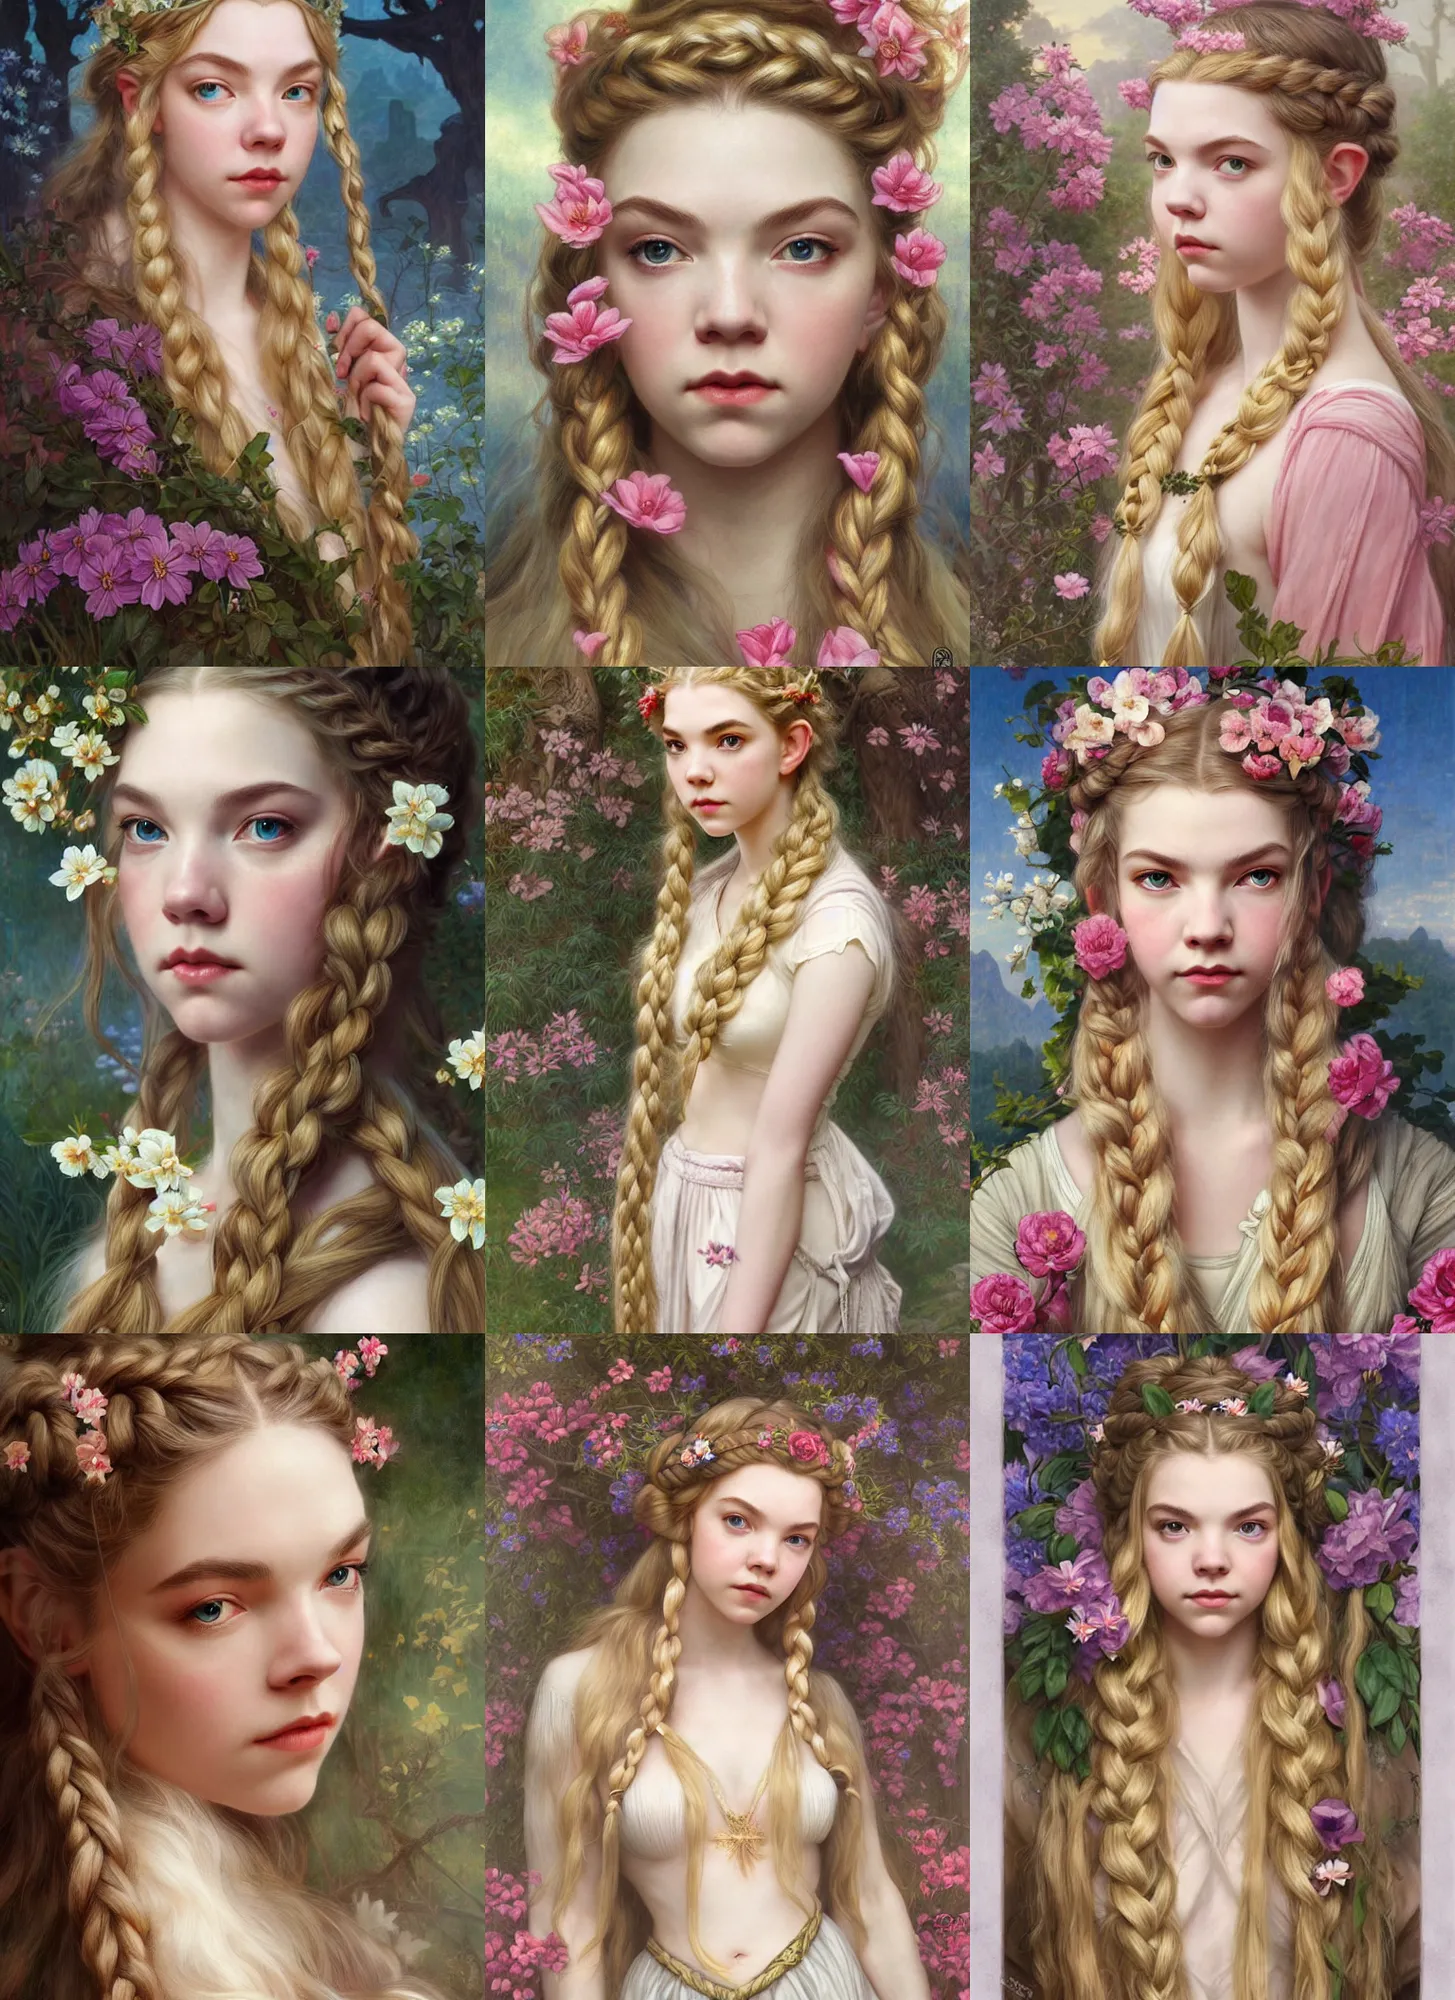 Prompt: portrait anya taylor-joy, beautiful elvish goddess with flowers in long blond braided hair, shining, 8k highly detailed, sharp focus, illustration, art by artgerm, mucha, bouguereau